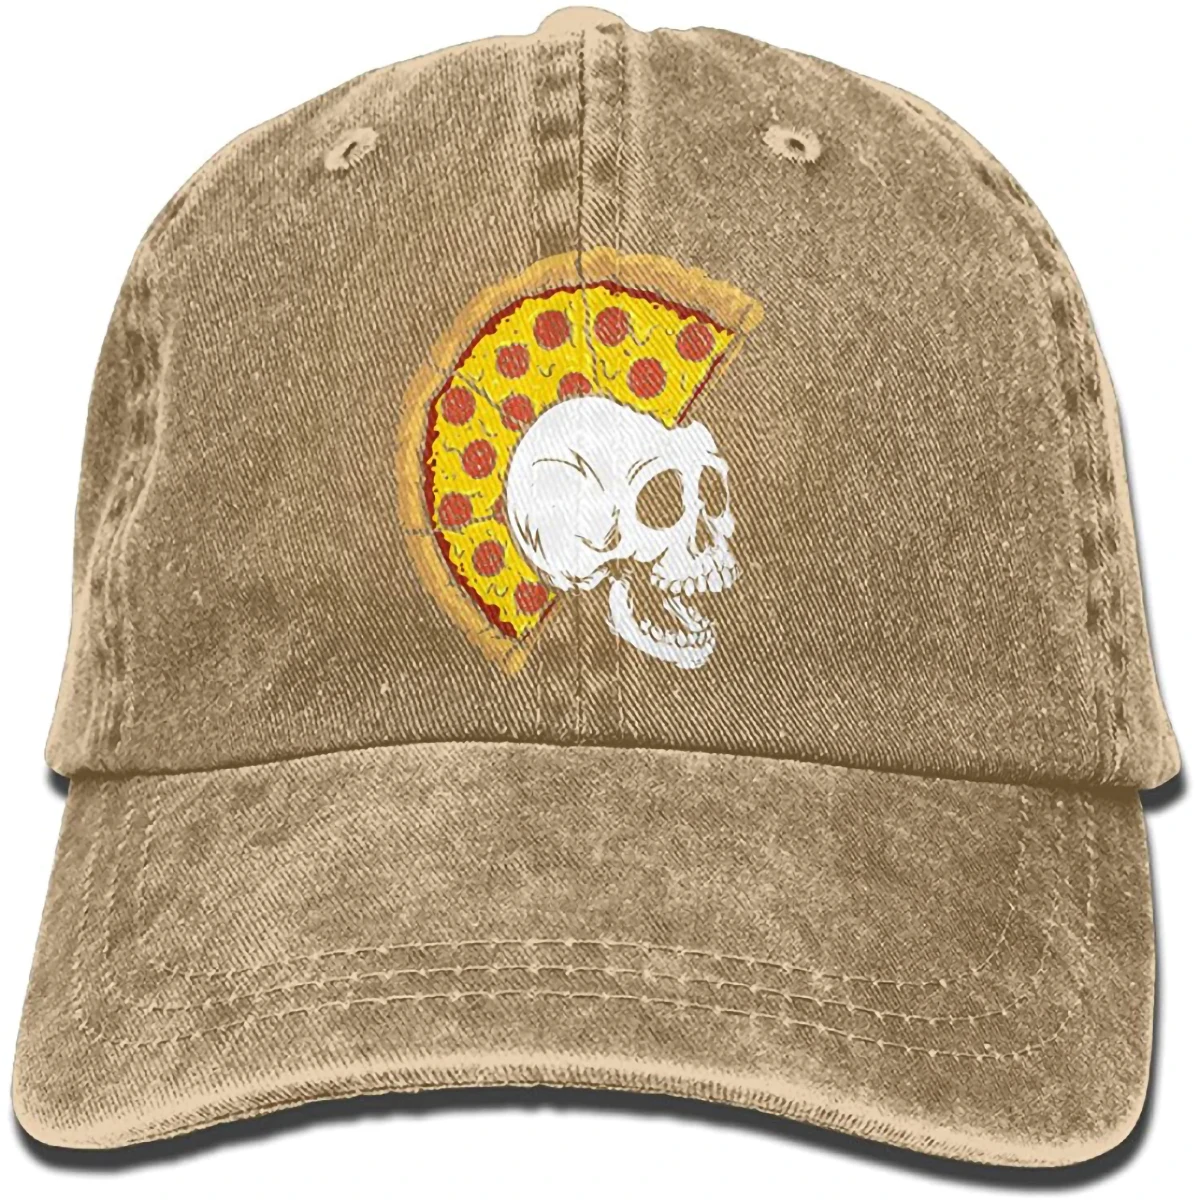 

Unisex Adult Pizza Skull Washed Denim Cotton Sport Outdoor Baseball Cap Adjustable One Size Sombrero De Mujer